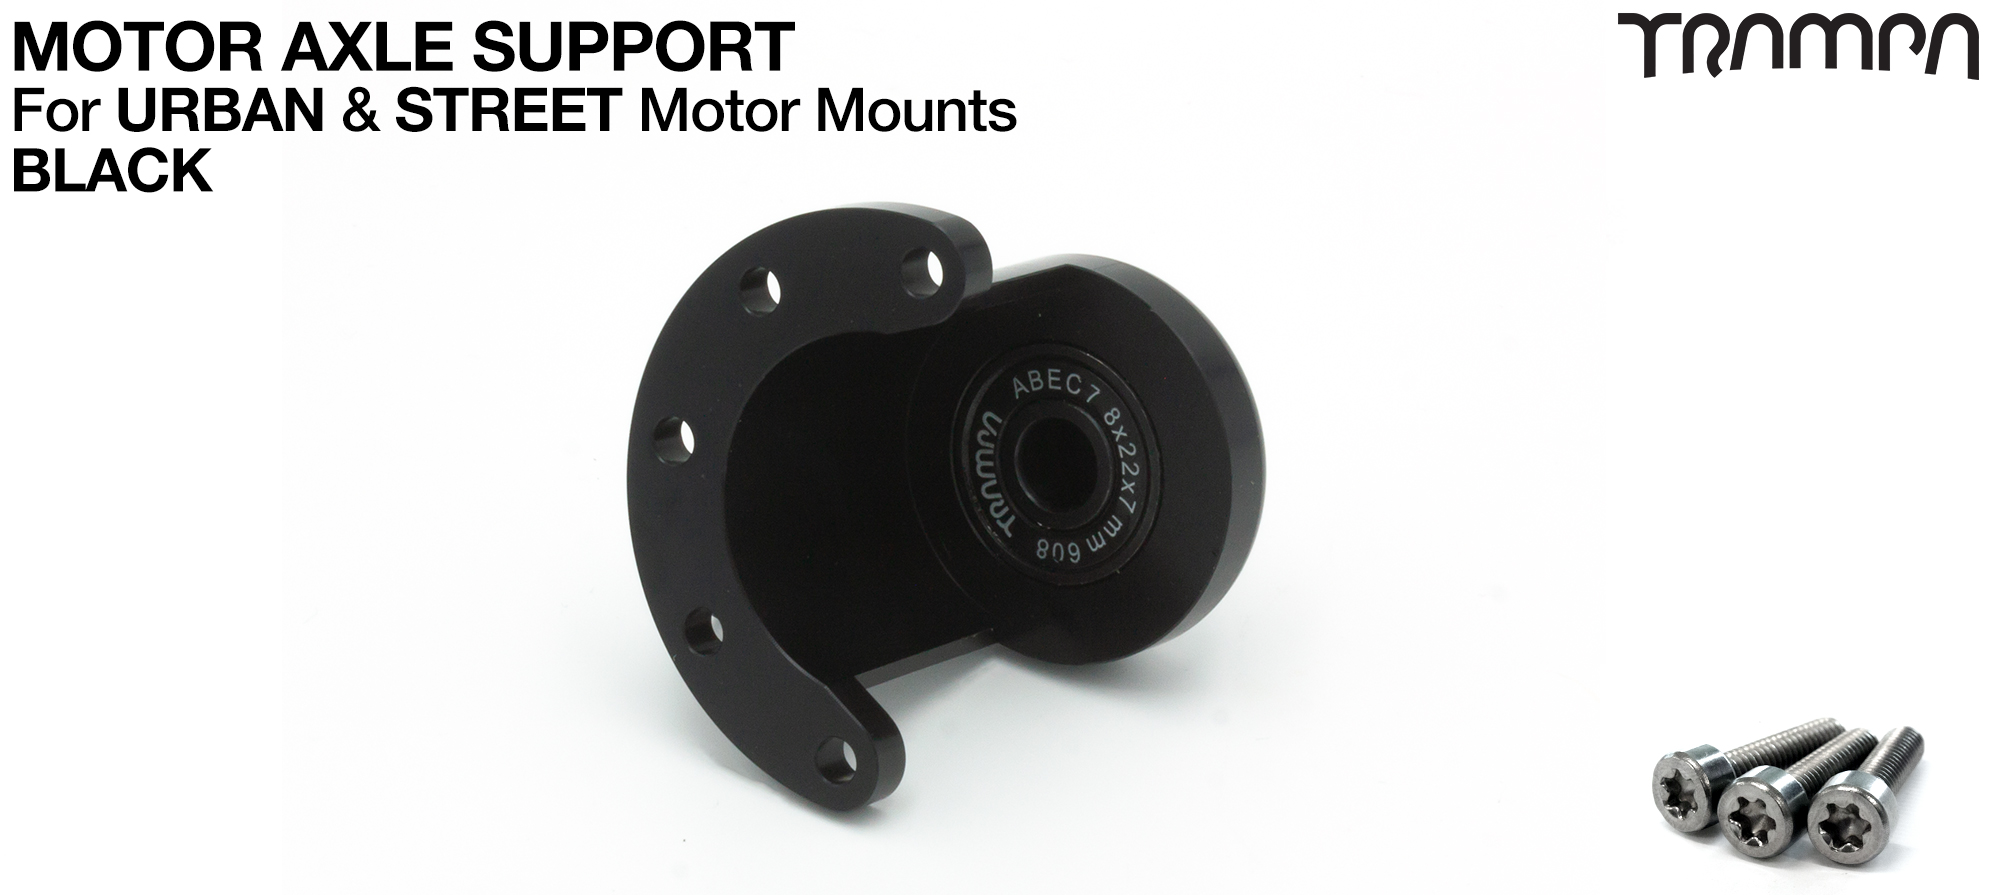 CARVE BOARD Motor Axle Support for Motor Mounts  - BLACK